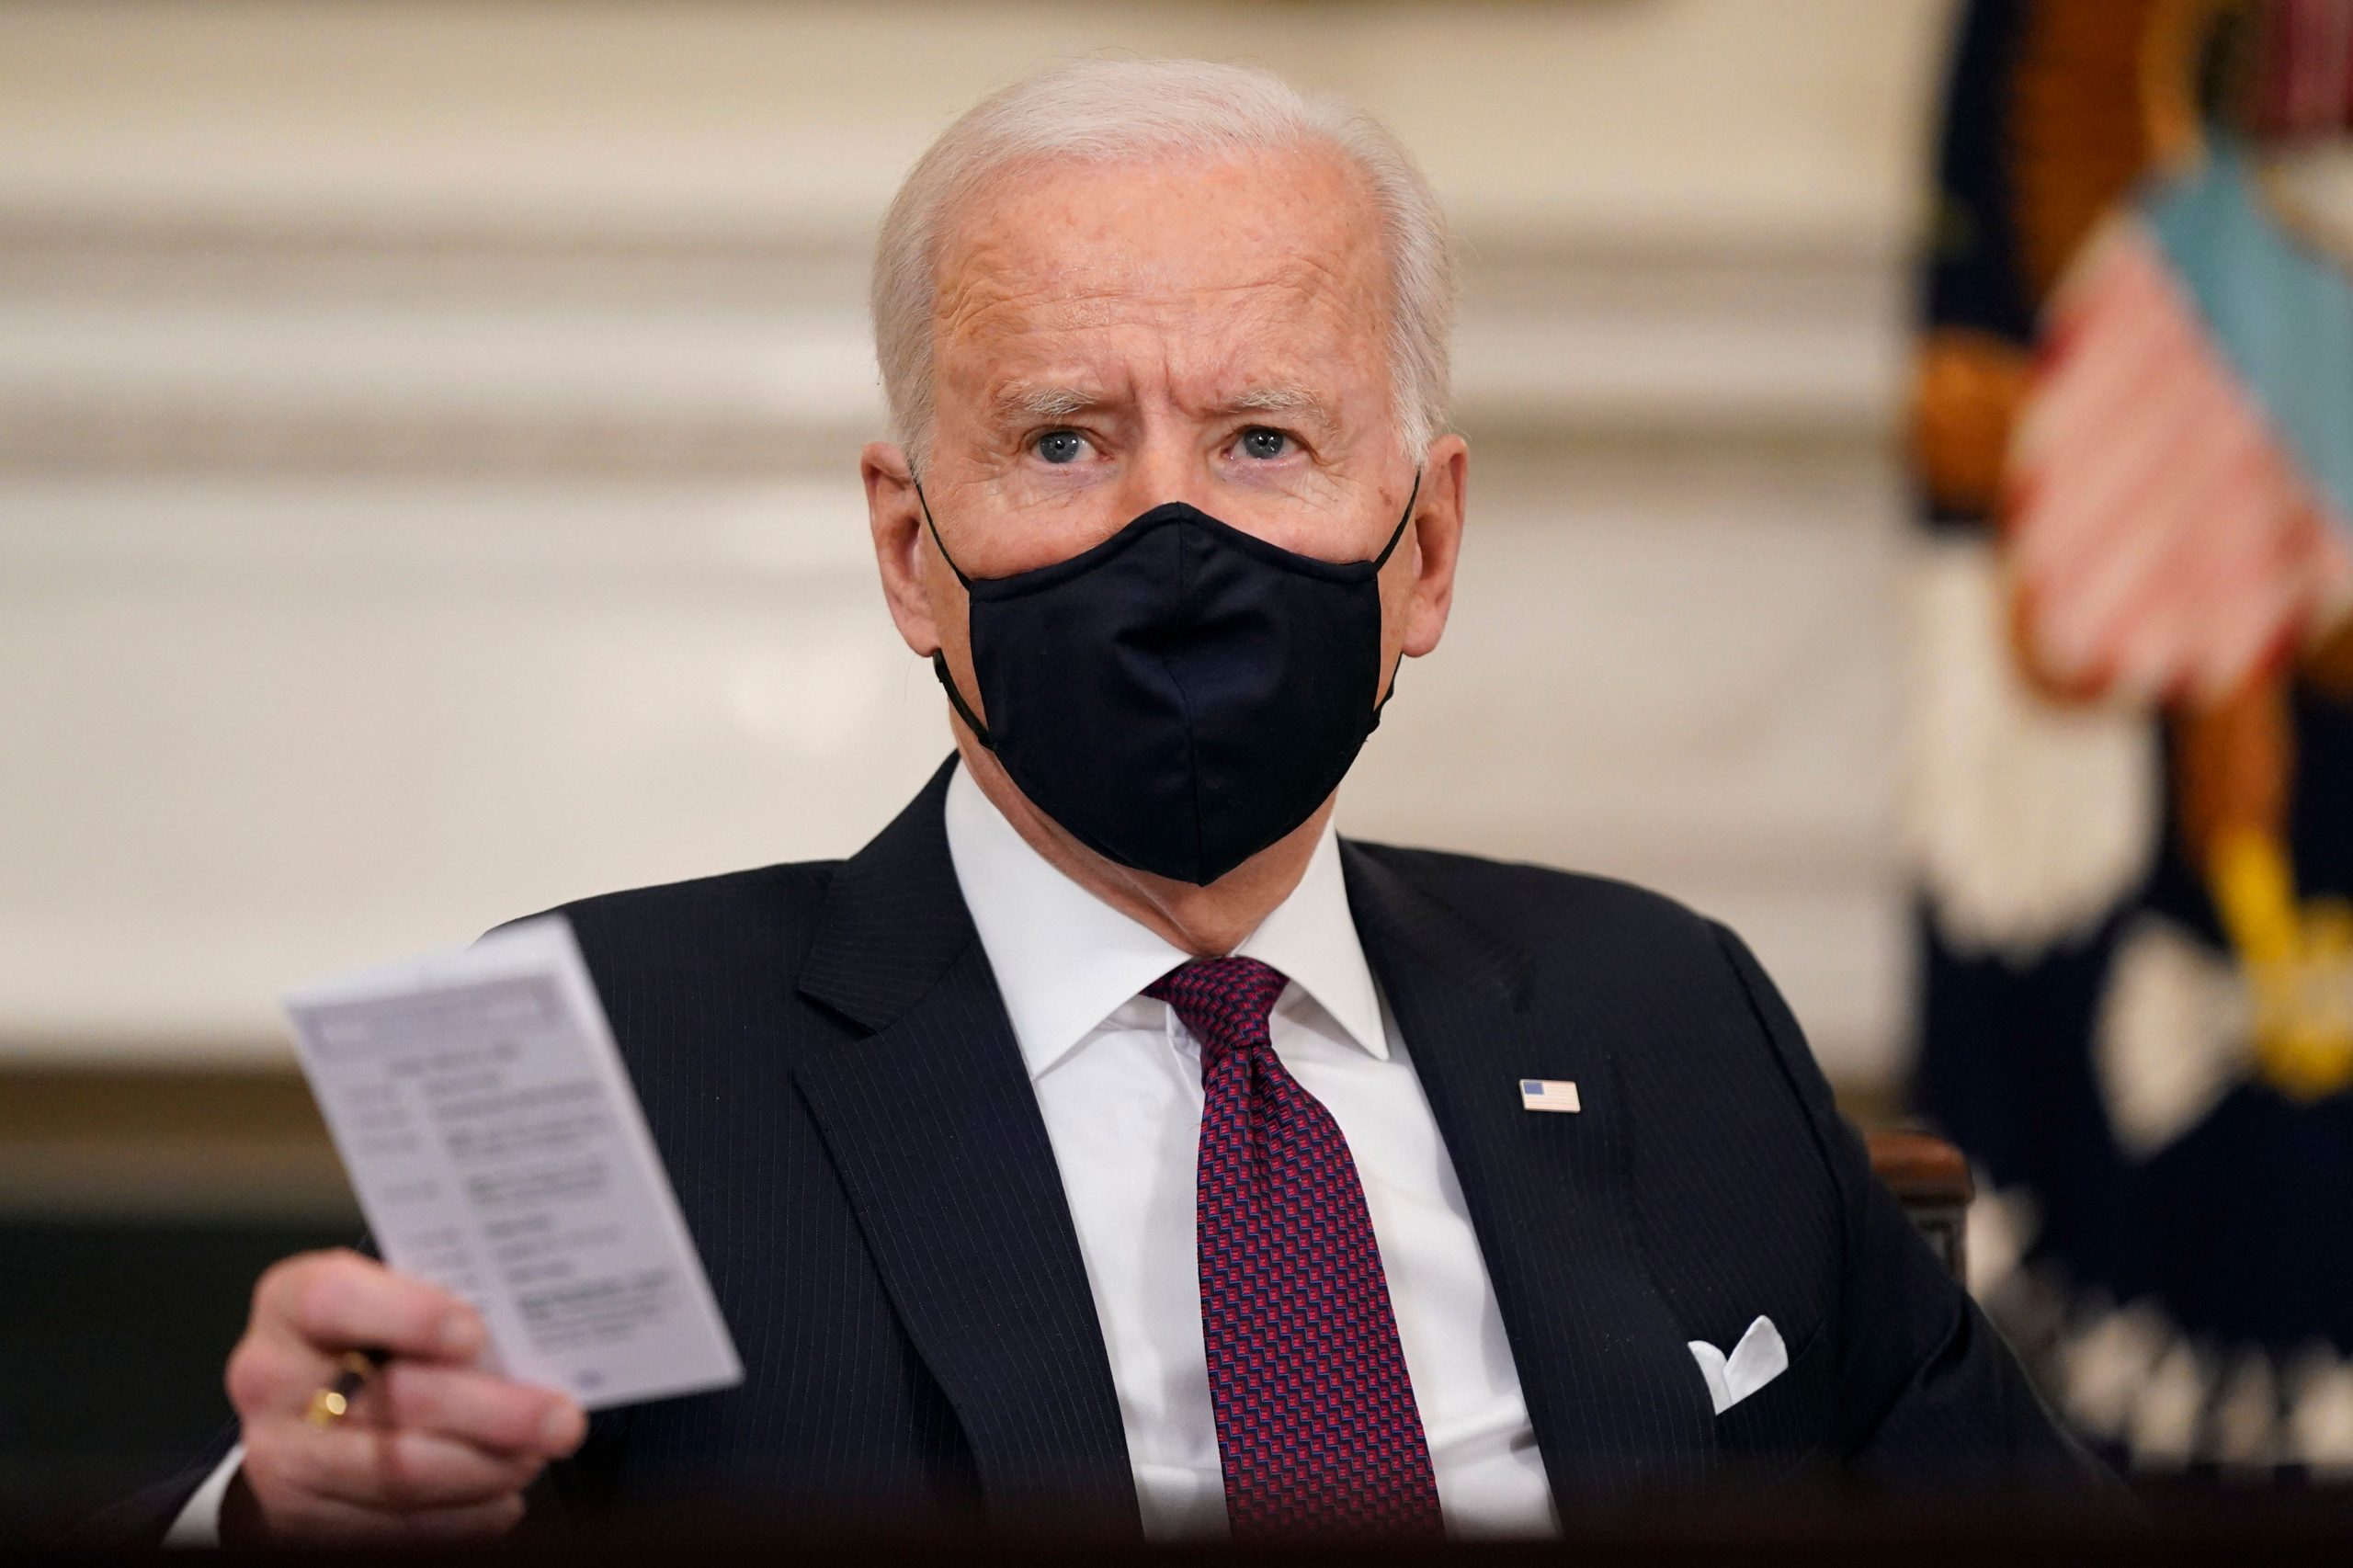 Joe Biden to urge ‘hope’ one year after pandemic start